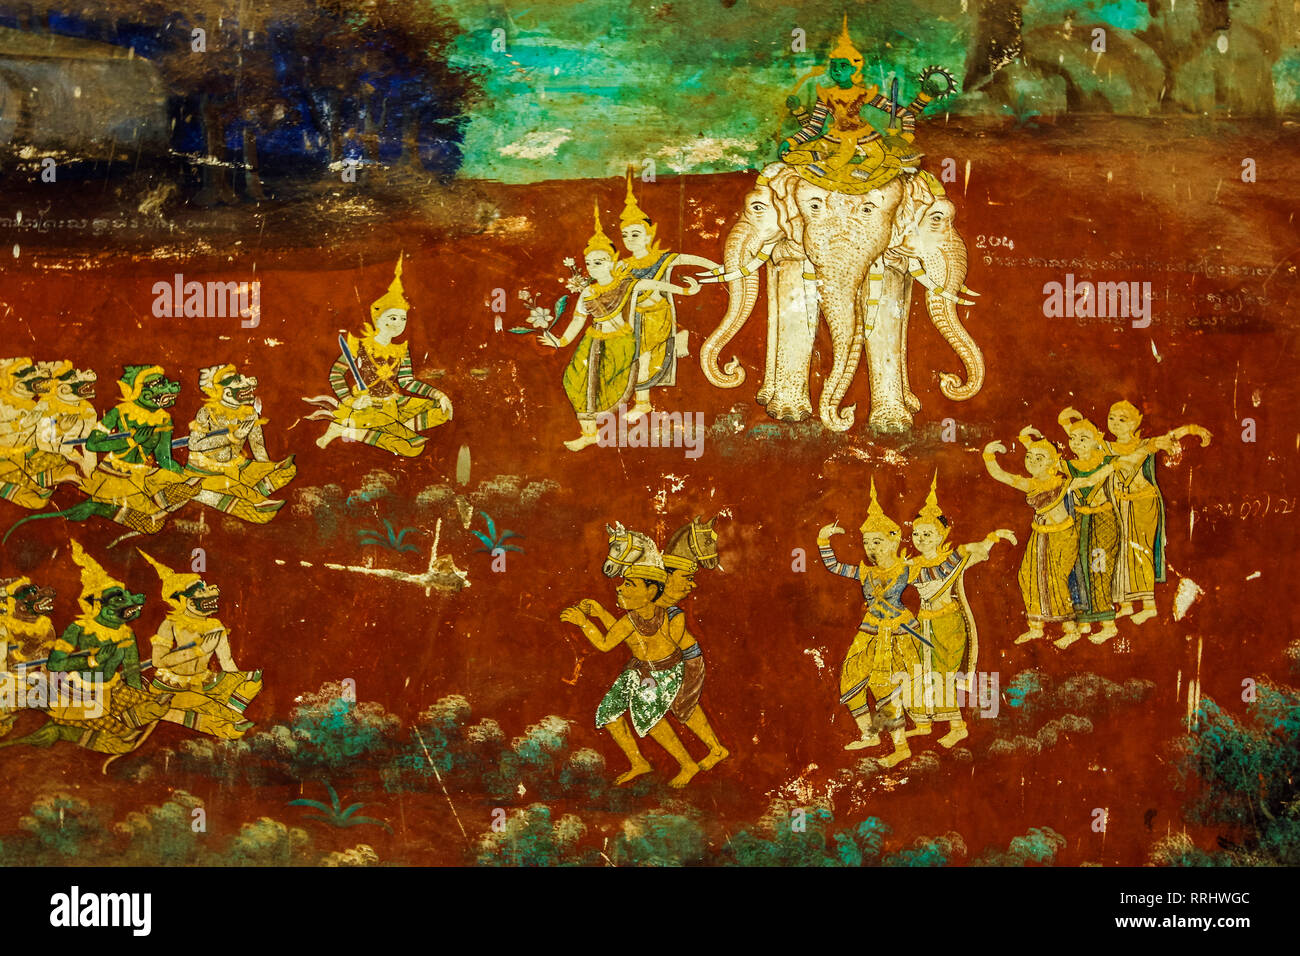 Fresco of the Reamker, the Khmer version of the Ramayana epic poem, Royal Palace cloisters, Royal Palace, Phnom Penh, Cambodia, Indochina Stock Photo